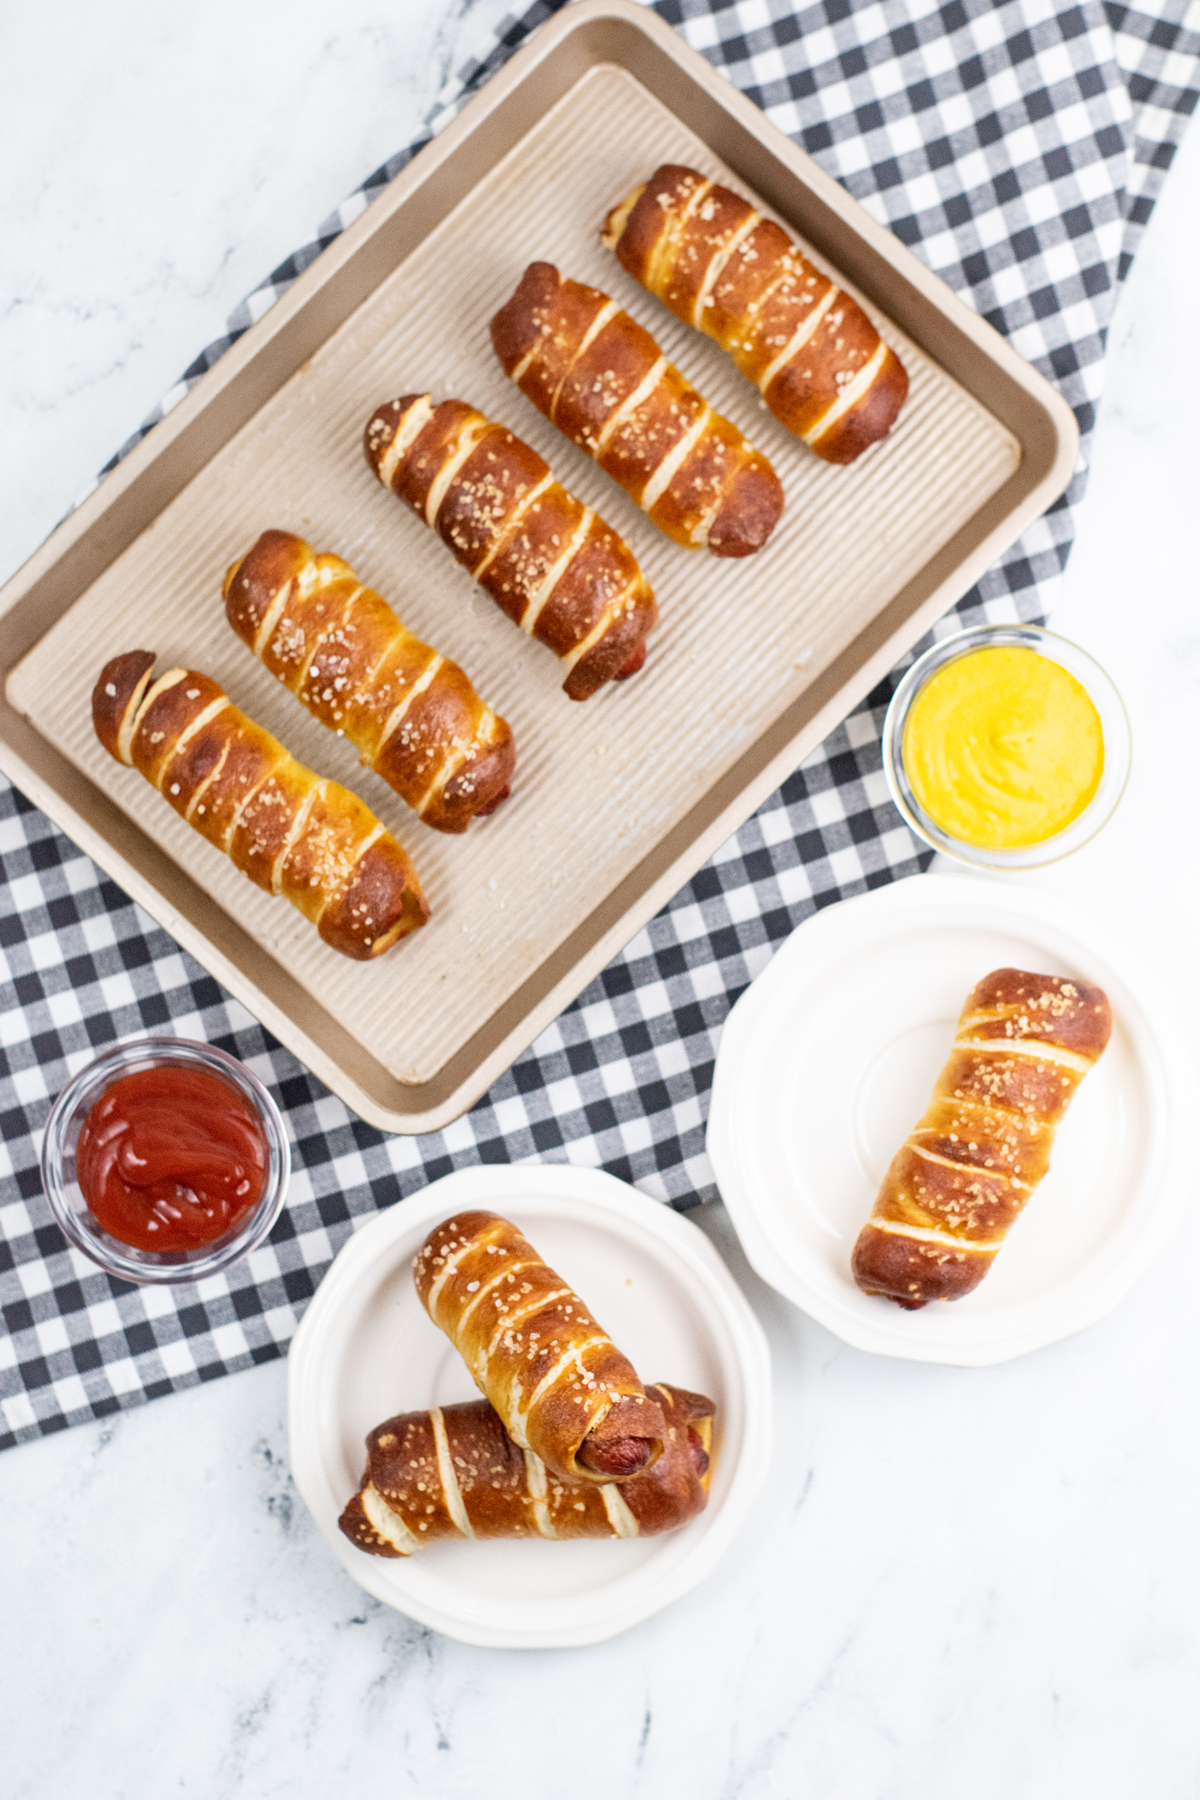 hot dogs wrapped in pretzel baked on baking sheet 